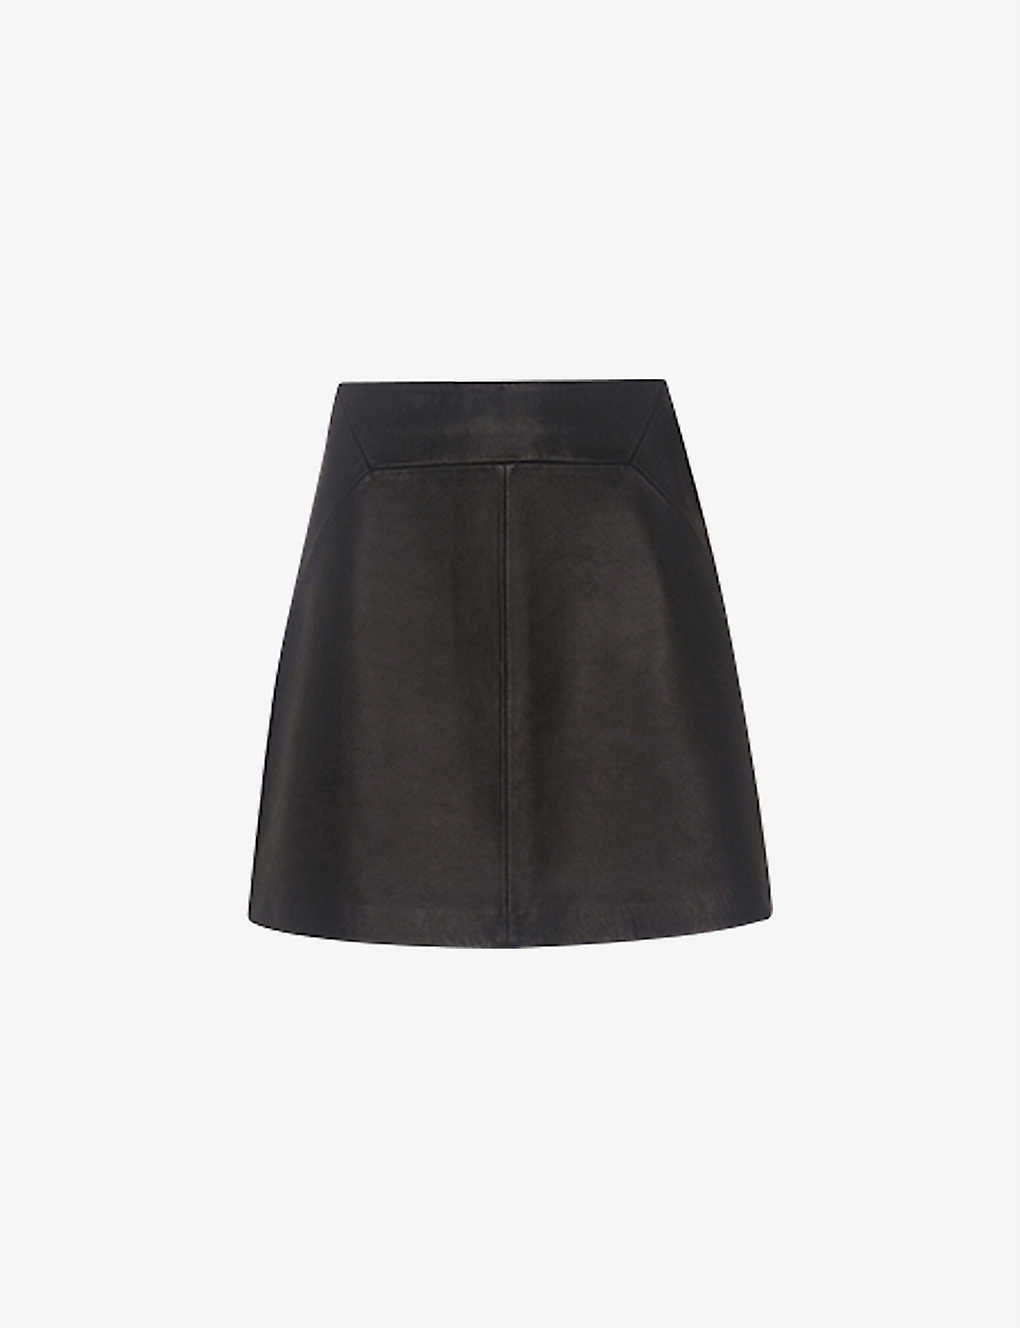 Shop Whistles Women's Black Leather Mini Skirt